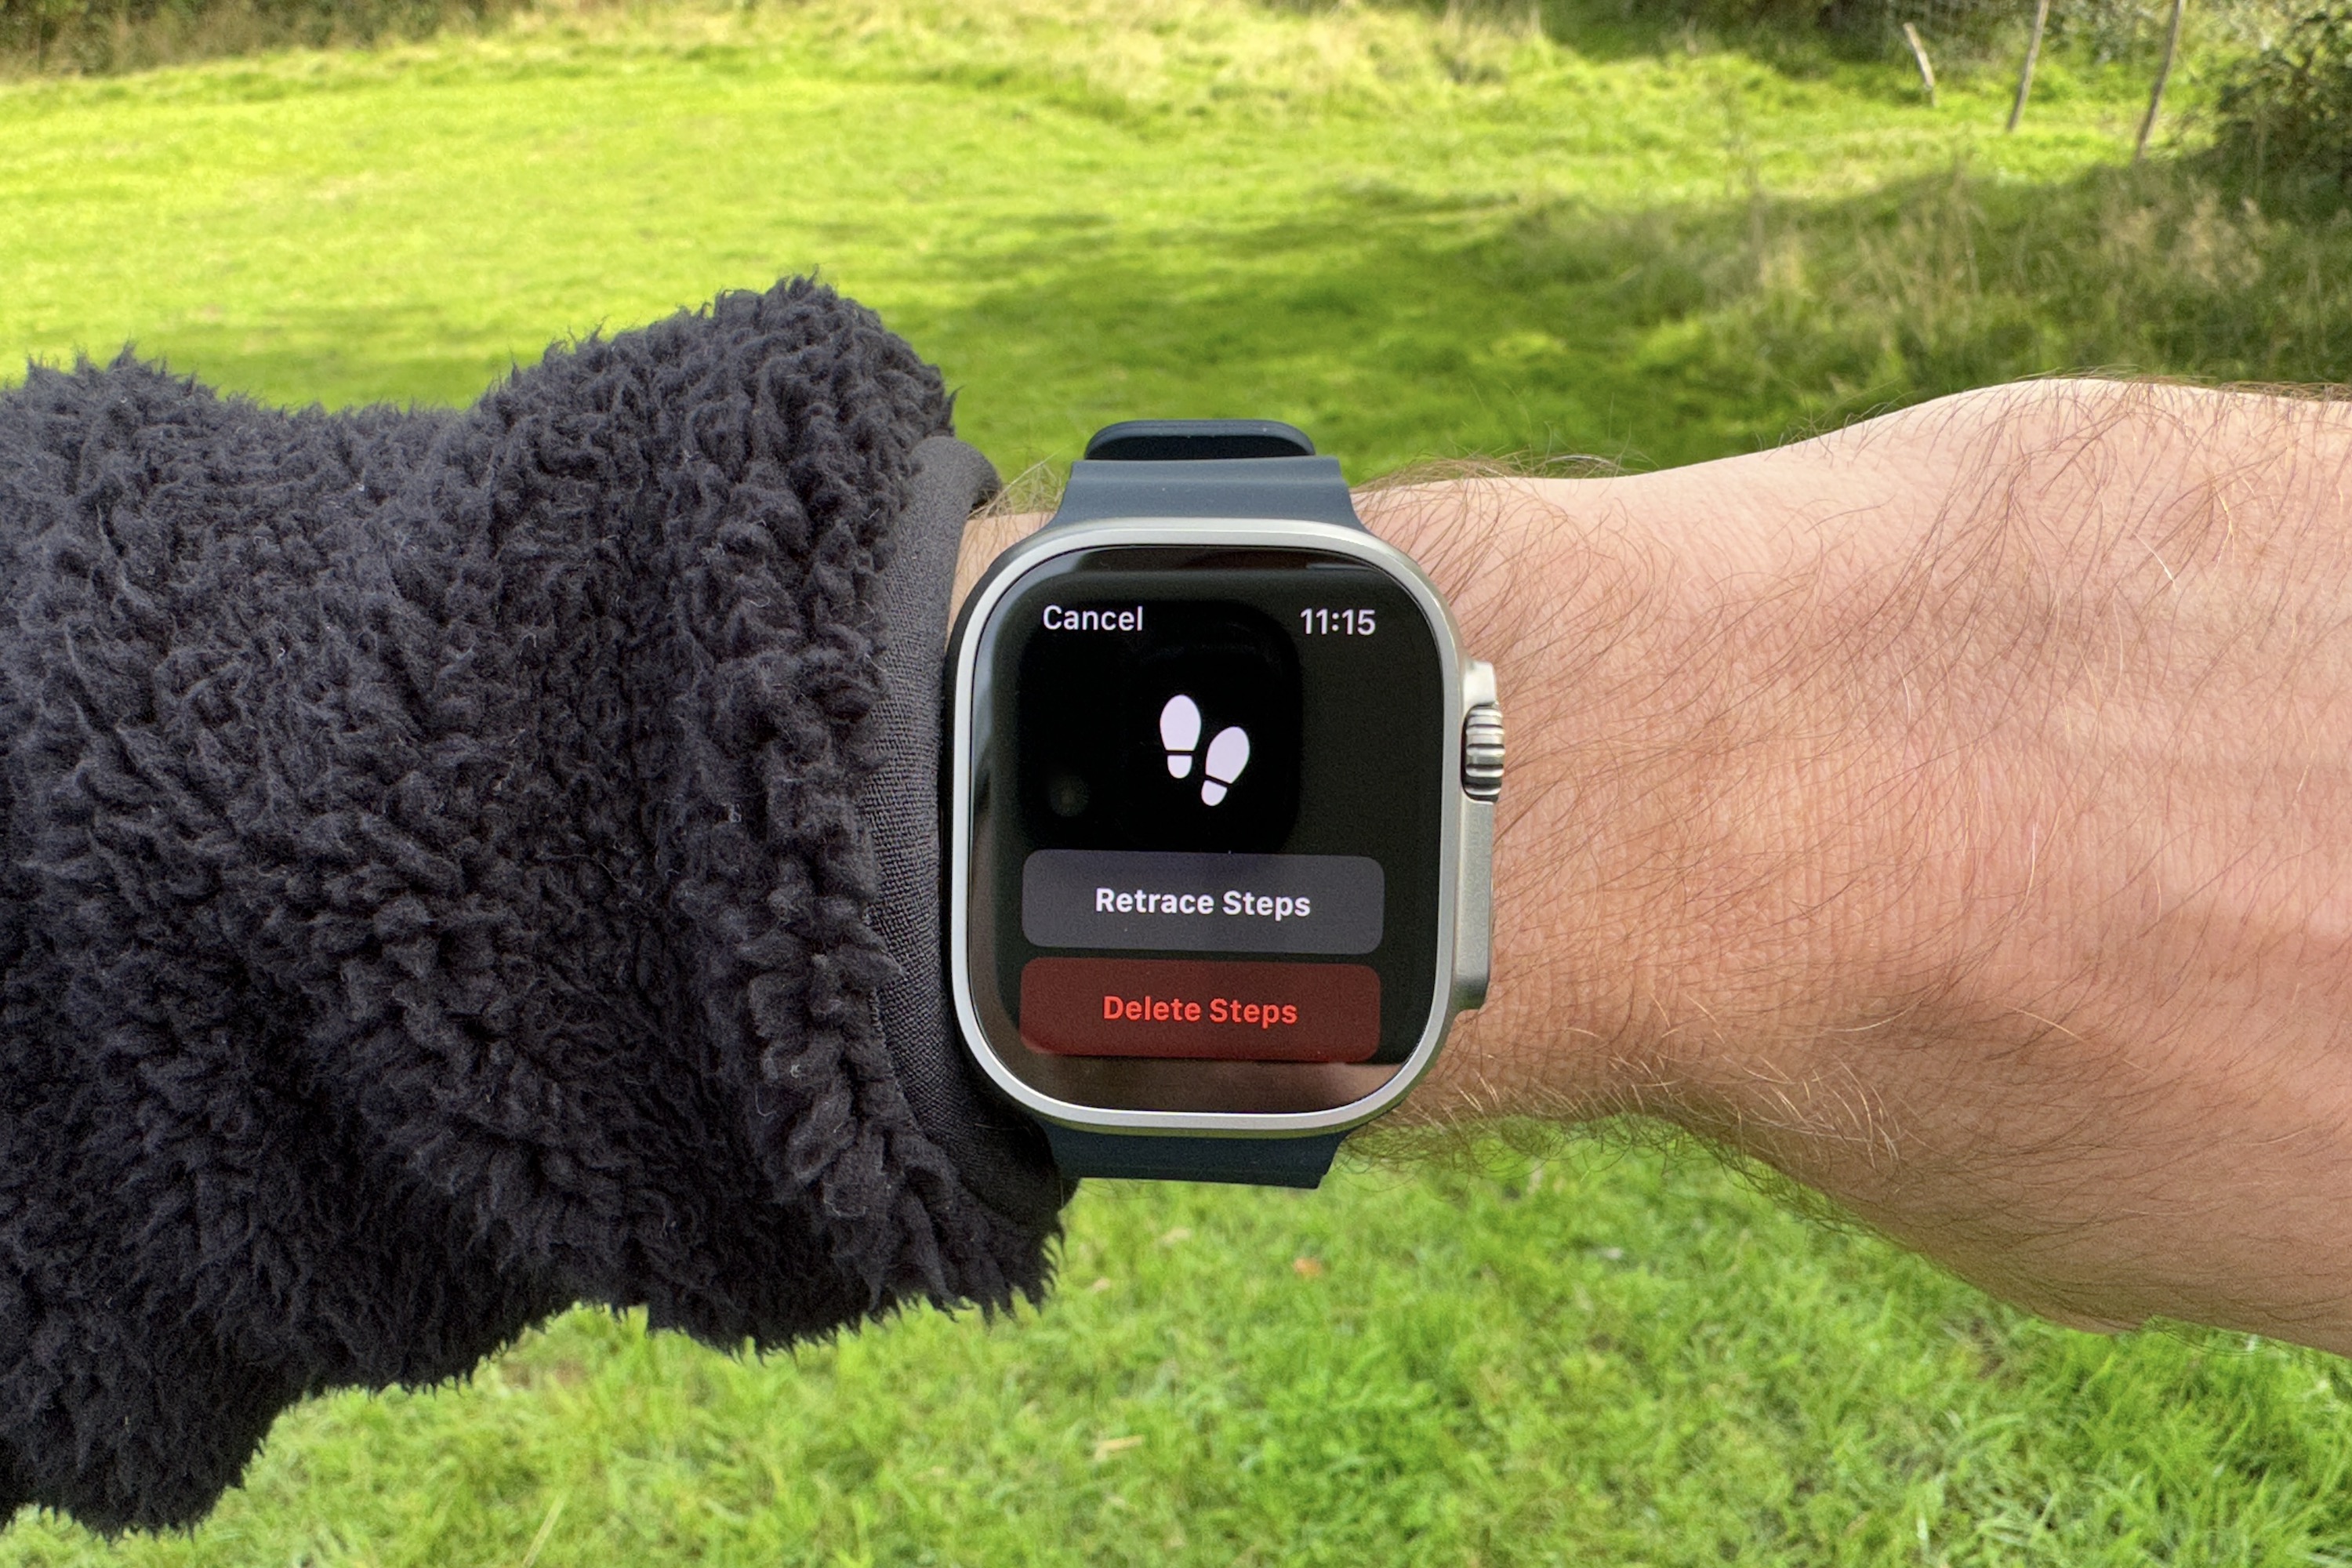 Watch 8 Ultra Series Smartwatch [49mm- GPS + Cellular] Fitness Tracker